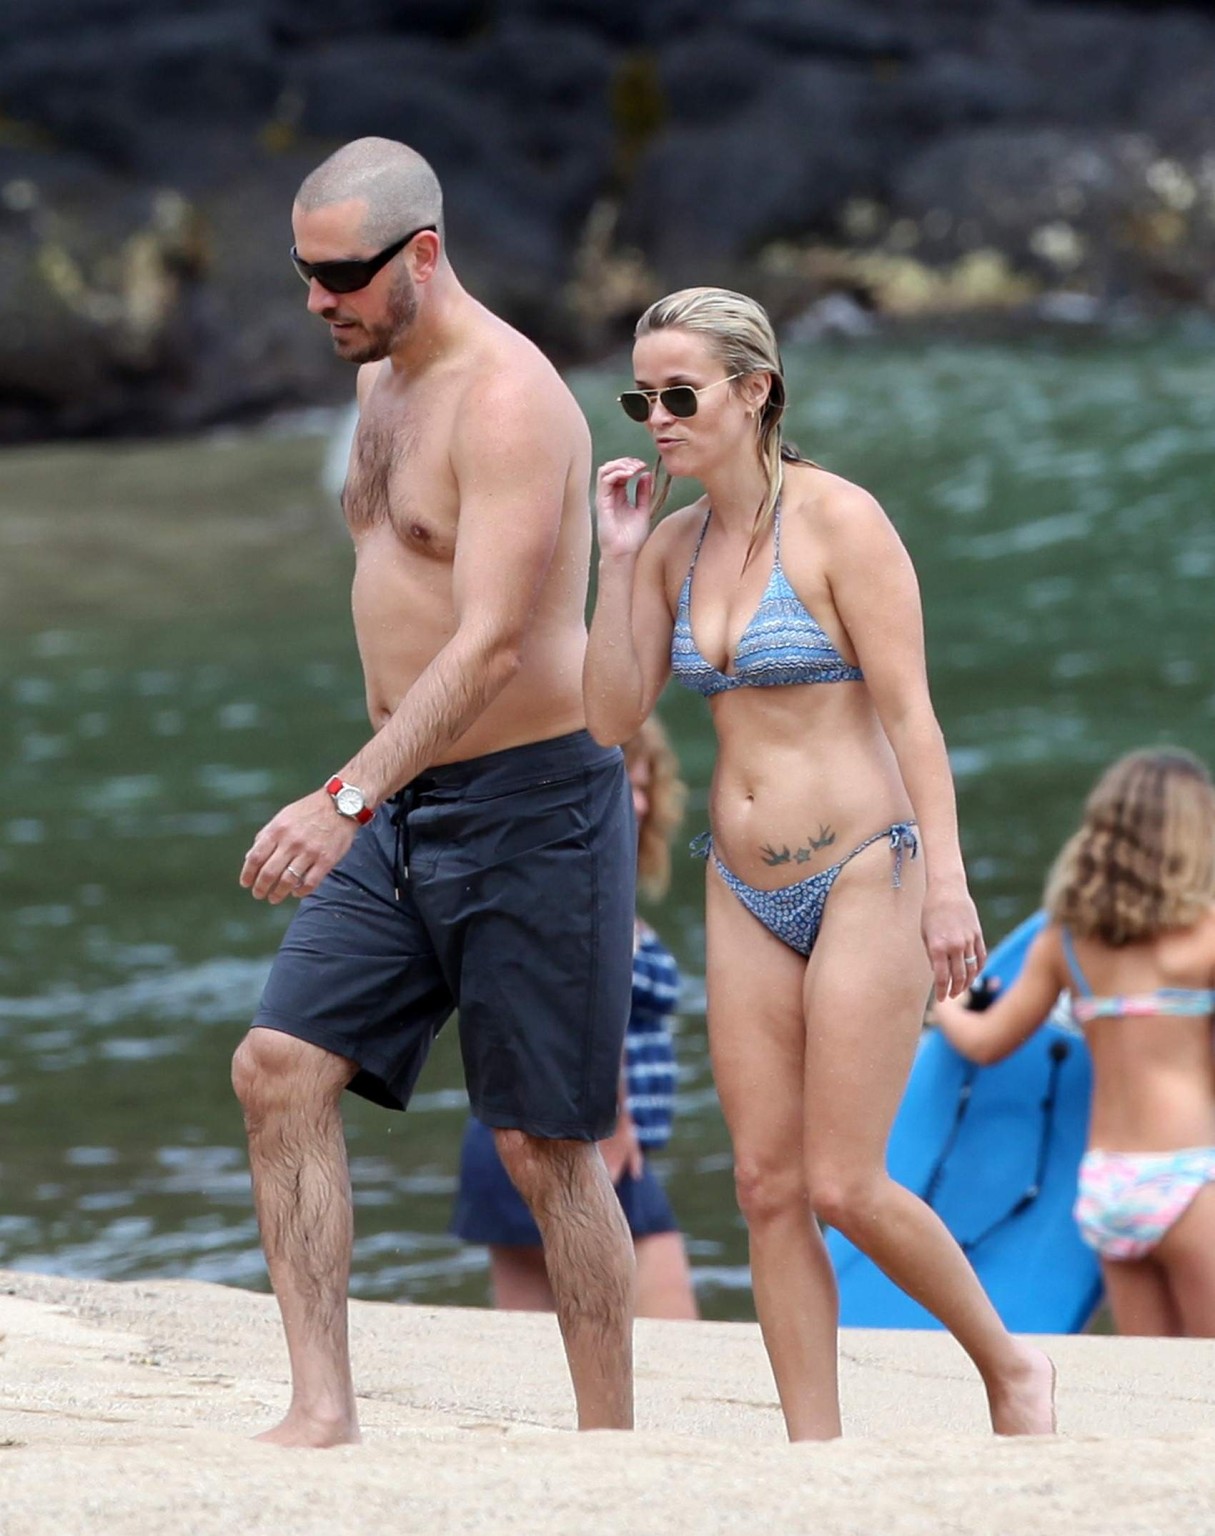 Reese witherspoon en bikini sur une plage hawaïenne
 #75291495